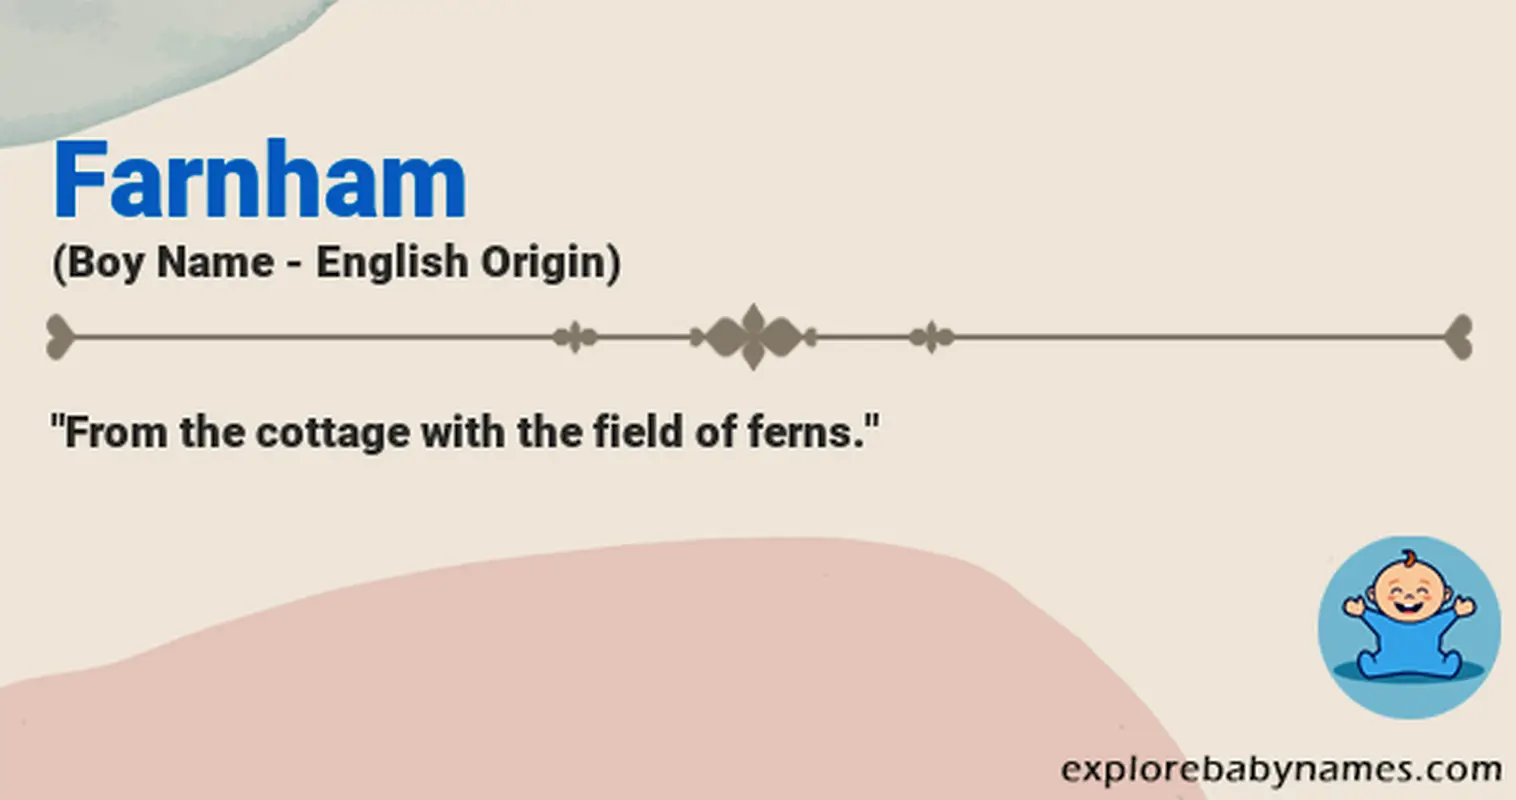 Meaning of Farnham